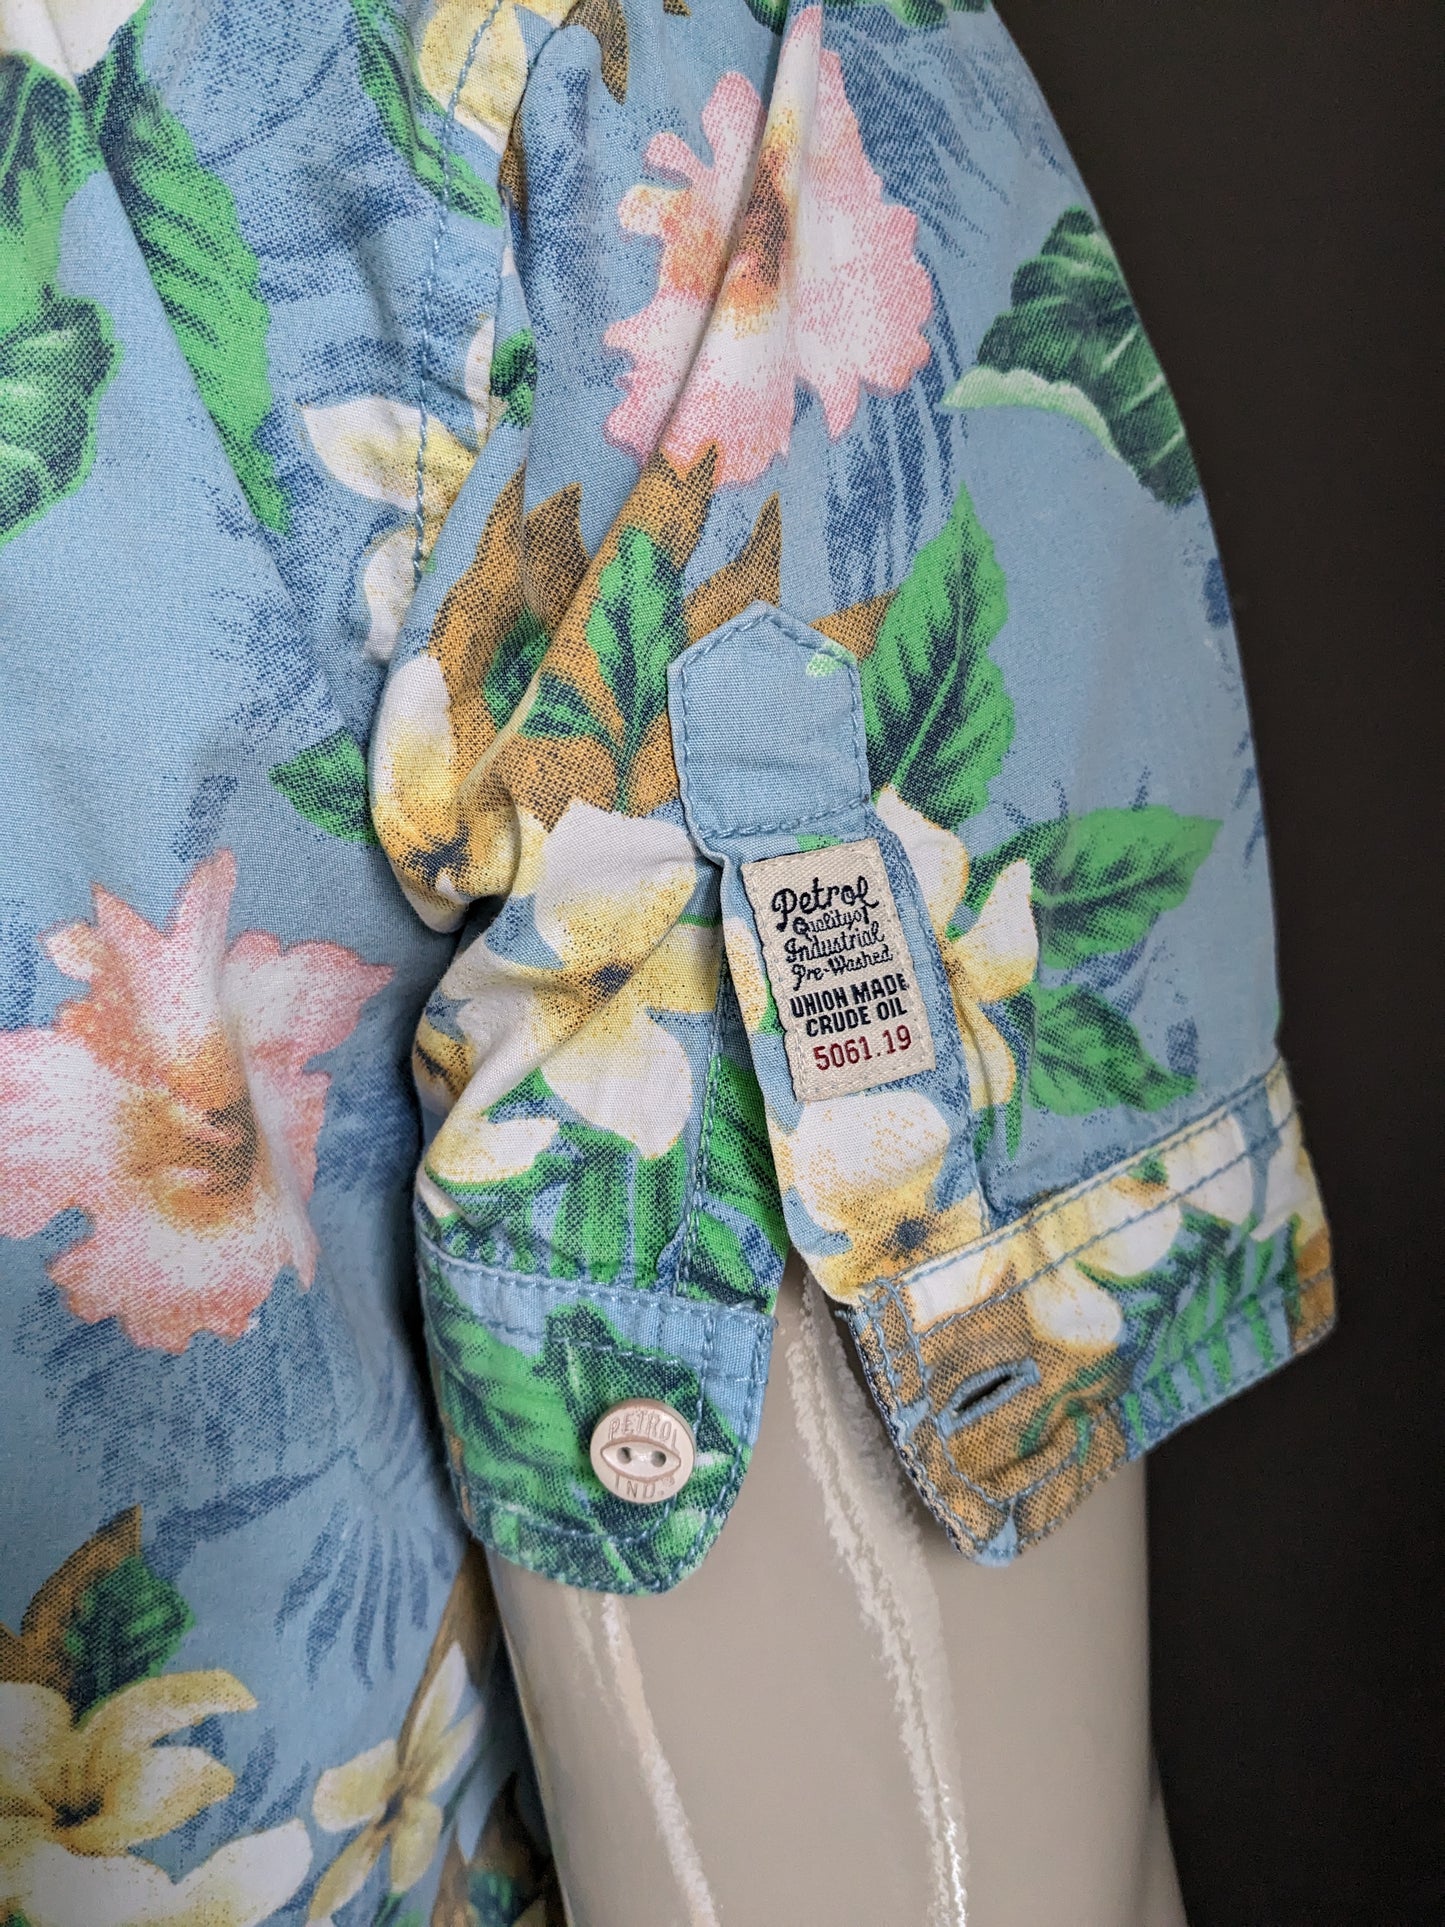 Petrol Hawaii shirt short sleeve. Blue green yellow pink floral print. Size L.